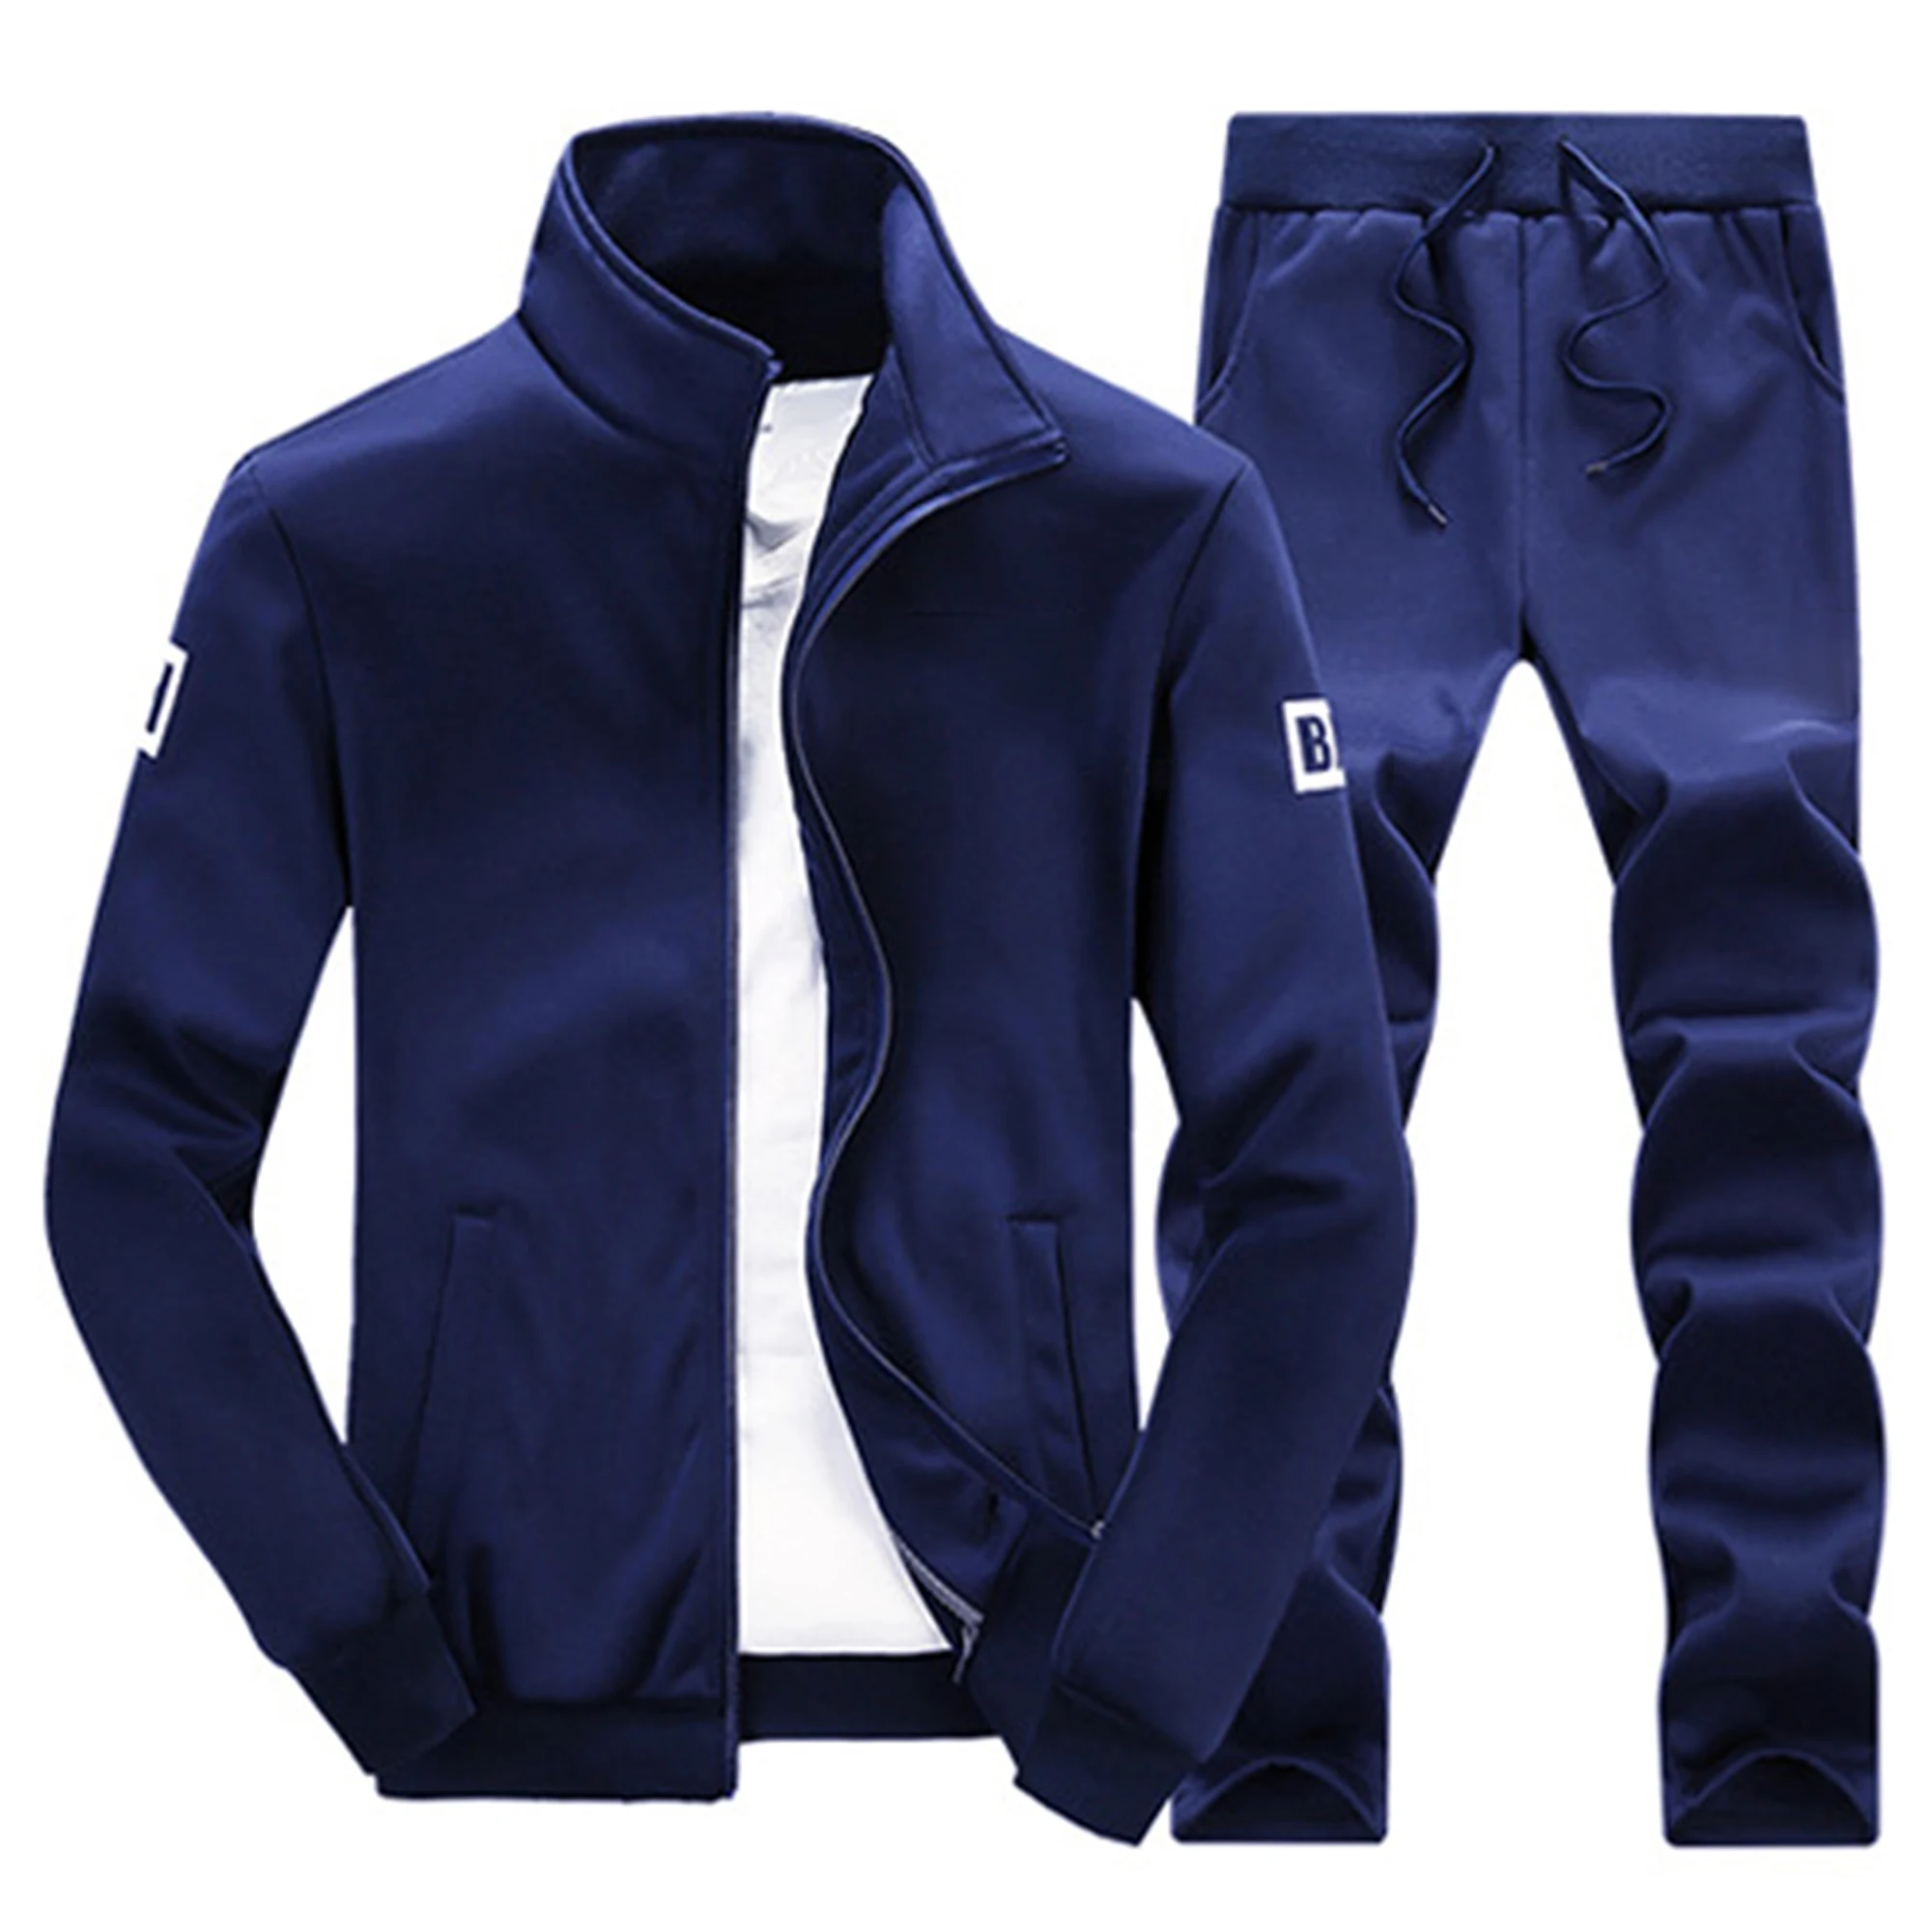 

premium designers sportswear male sport skinny jogging track jacket blank sweatsuit joggers suits sets mens tracksuits, Black,white,blue